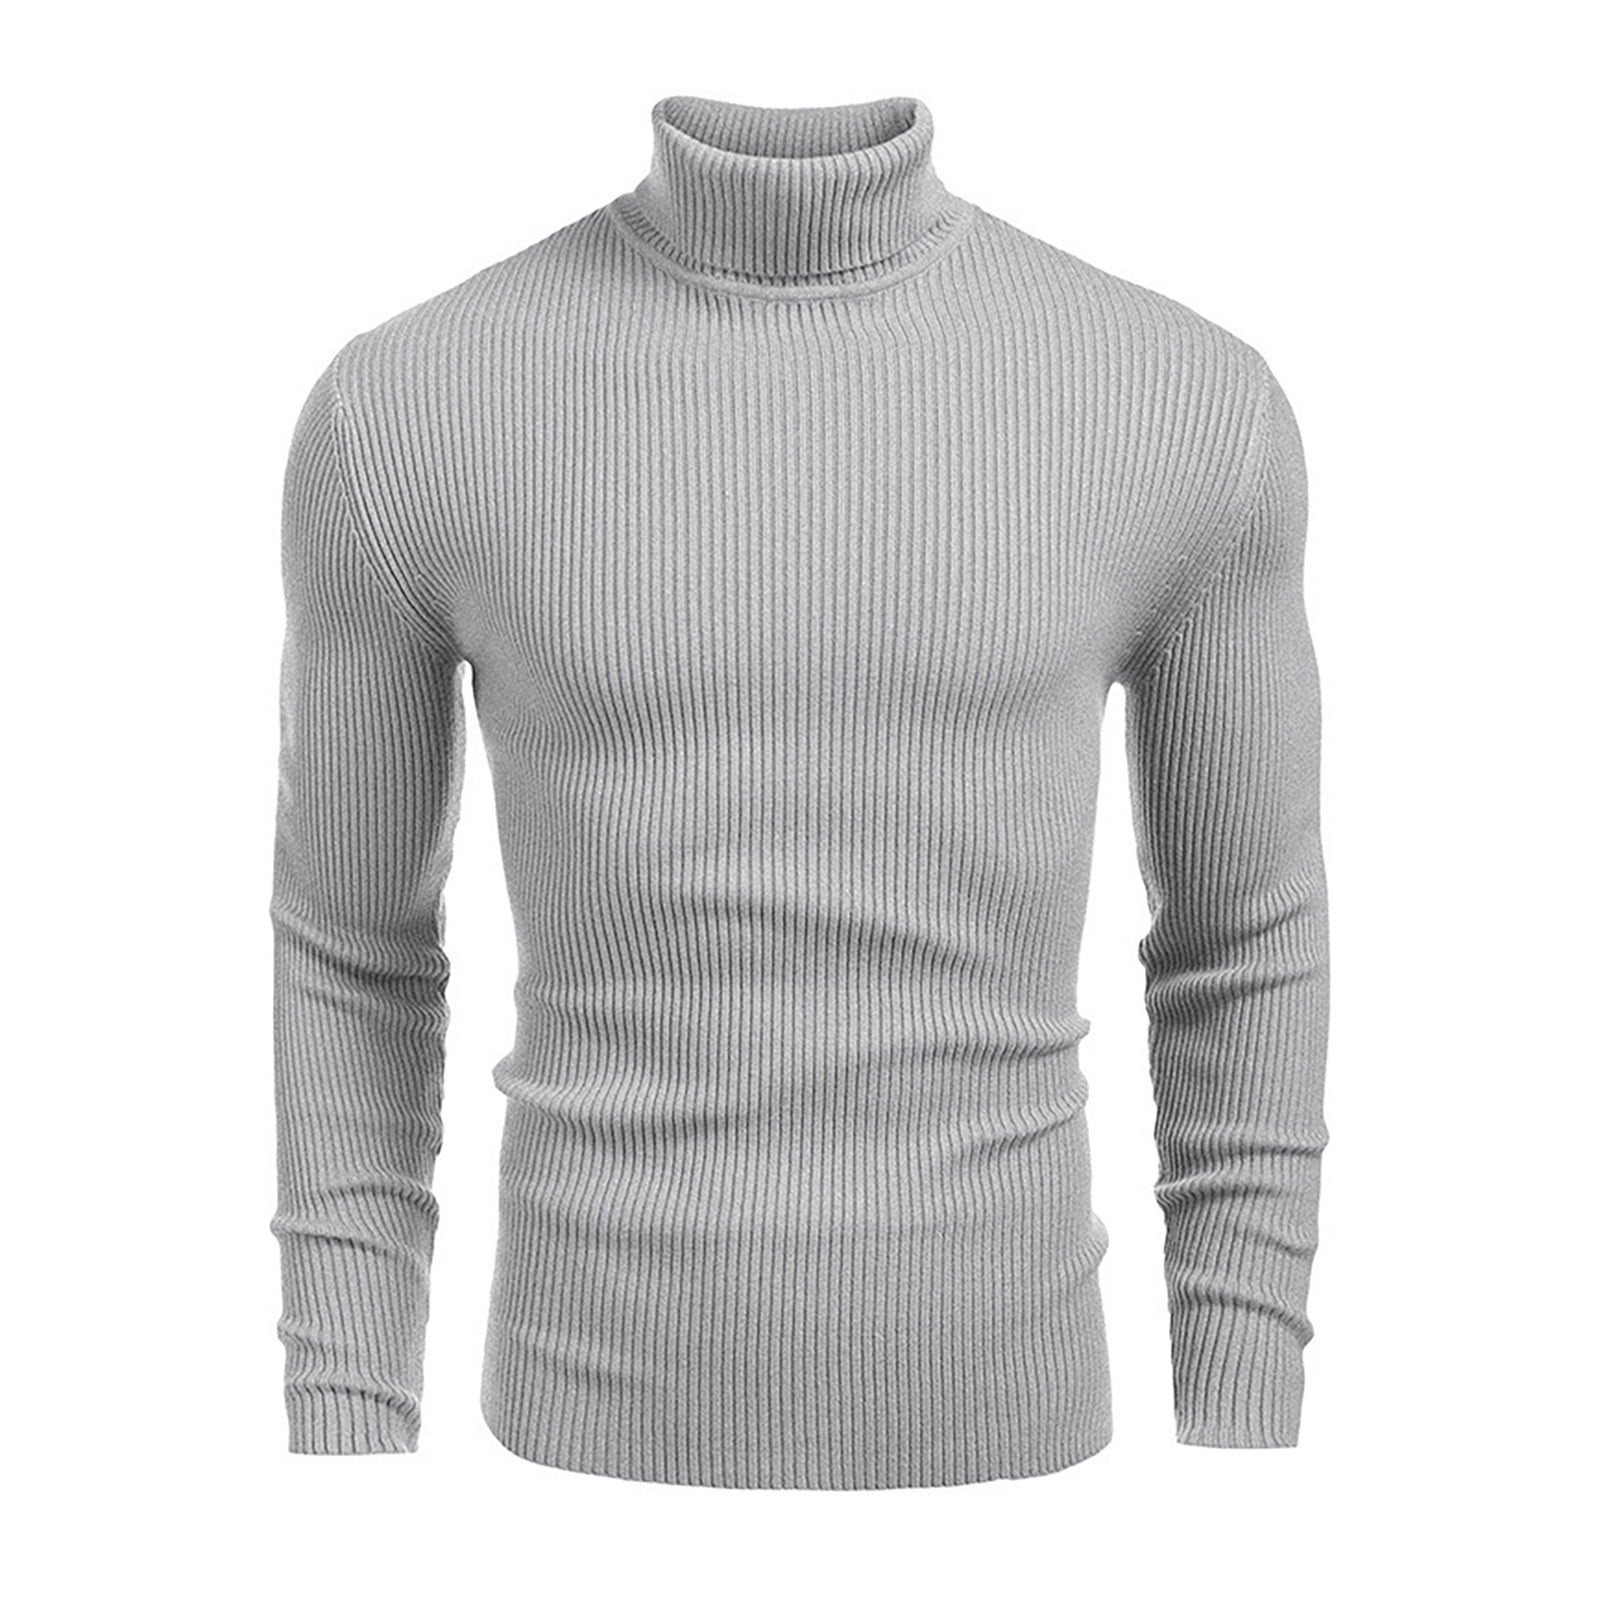 Ogiraw Tops for Men Men Sweater Cardigan Sweaters Mens Turtleneck ...